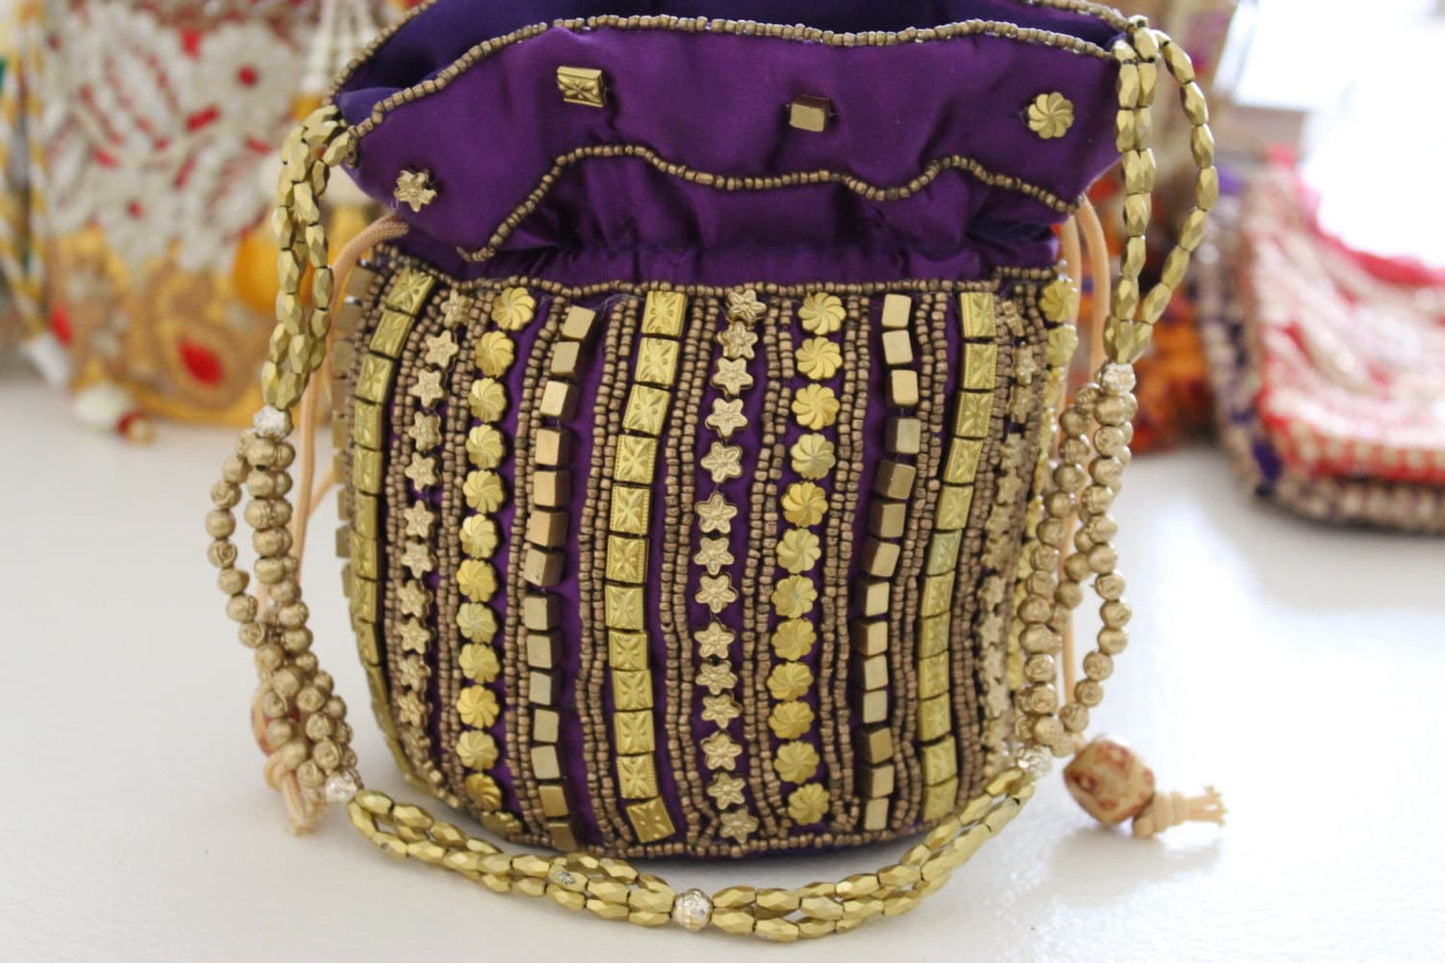 Wristlet / Clutch Bags Ethnic Royal Vintage style Gold Shells design Indian Weddings Pakistani Weddings Accessory